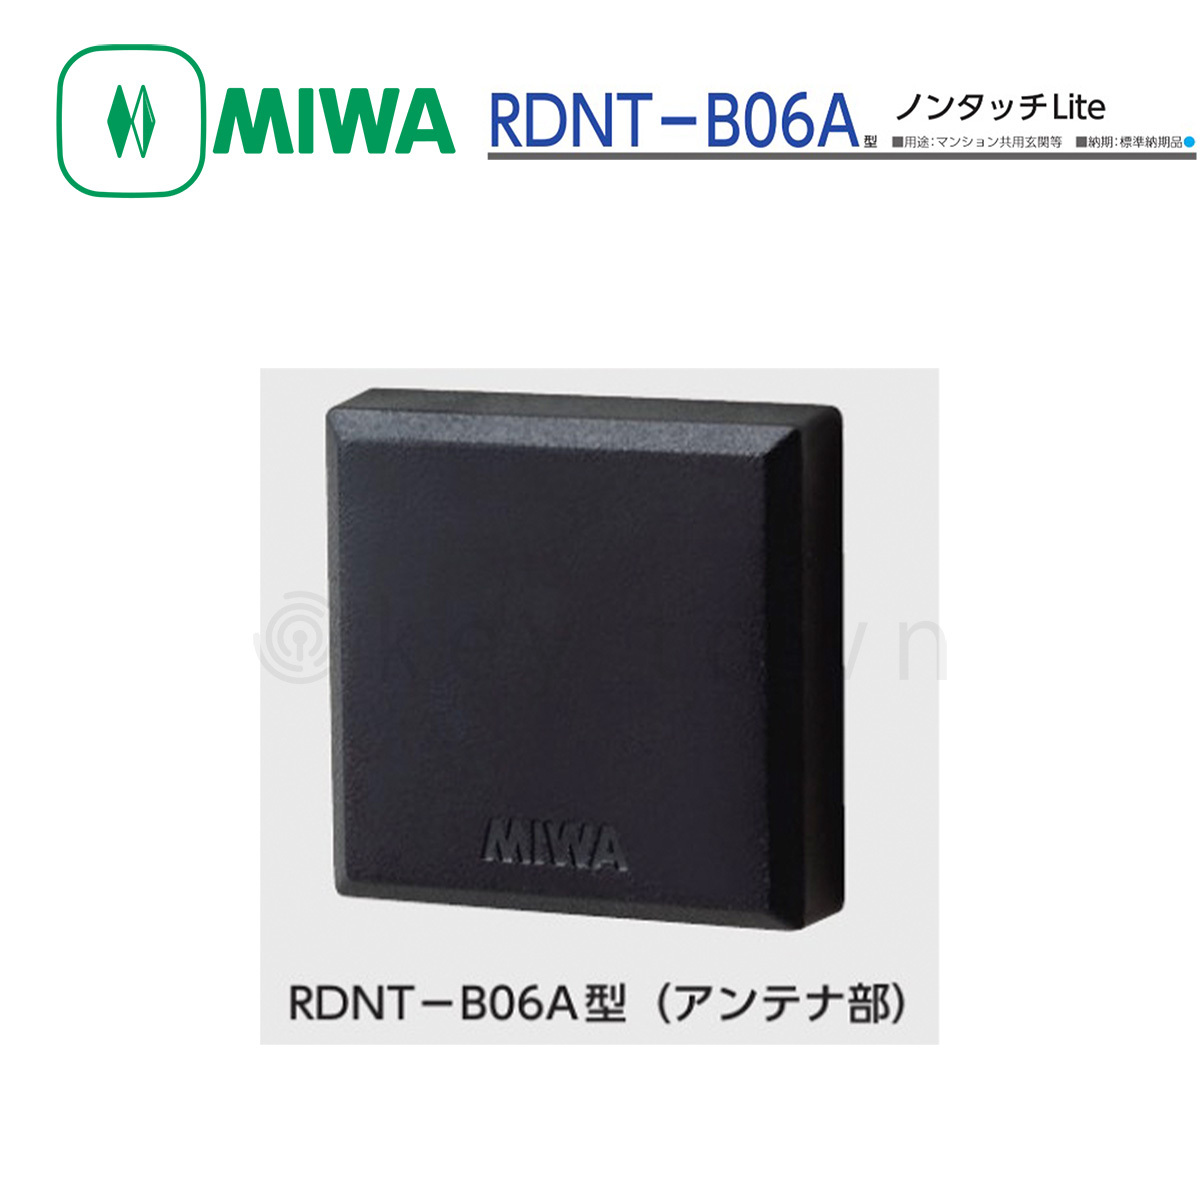 MIWA 【美和ロック】 ホテル用高級ケースロック [MIWA-MA] U9MAD-1型 